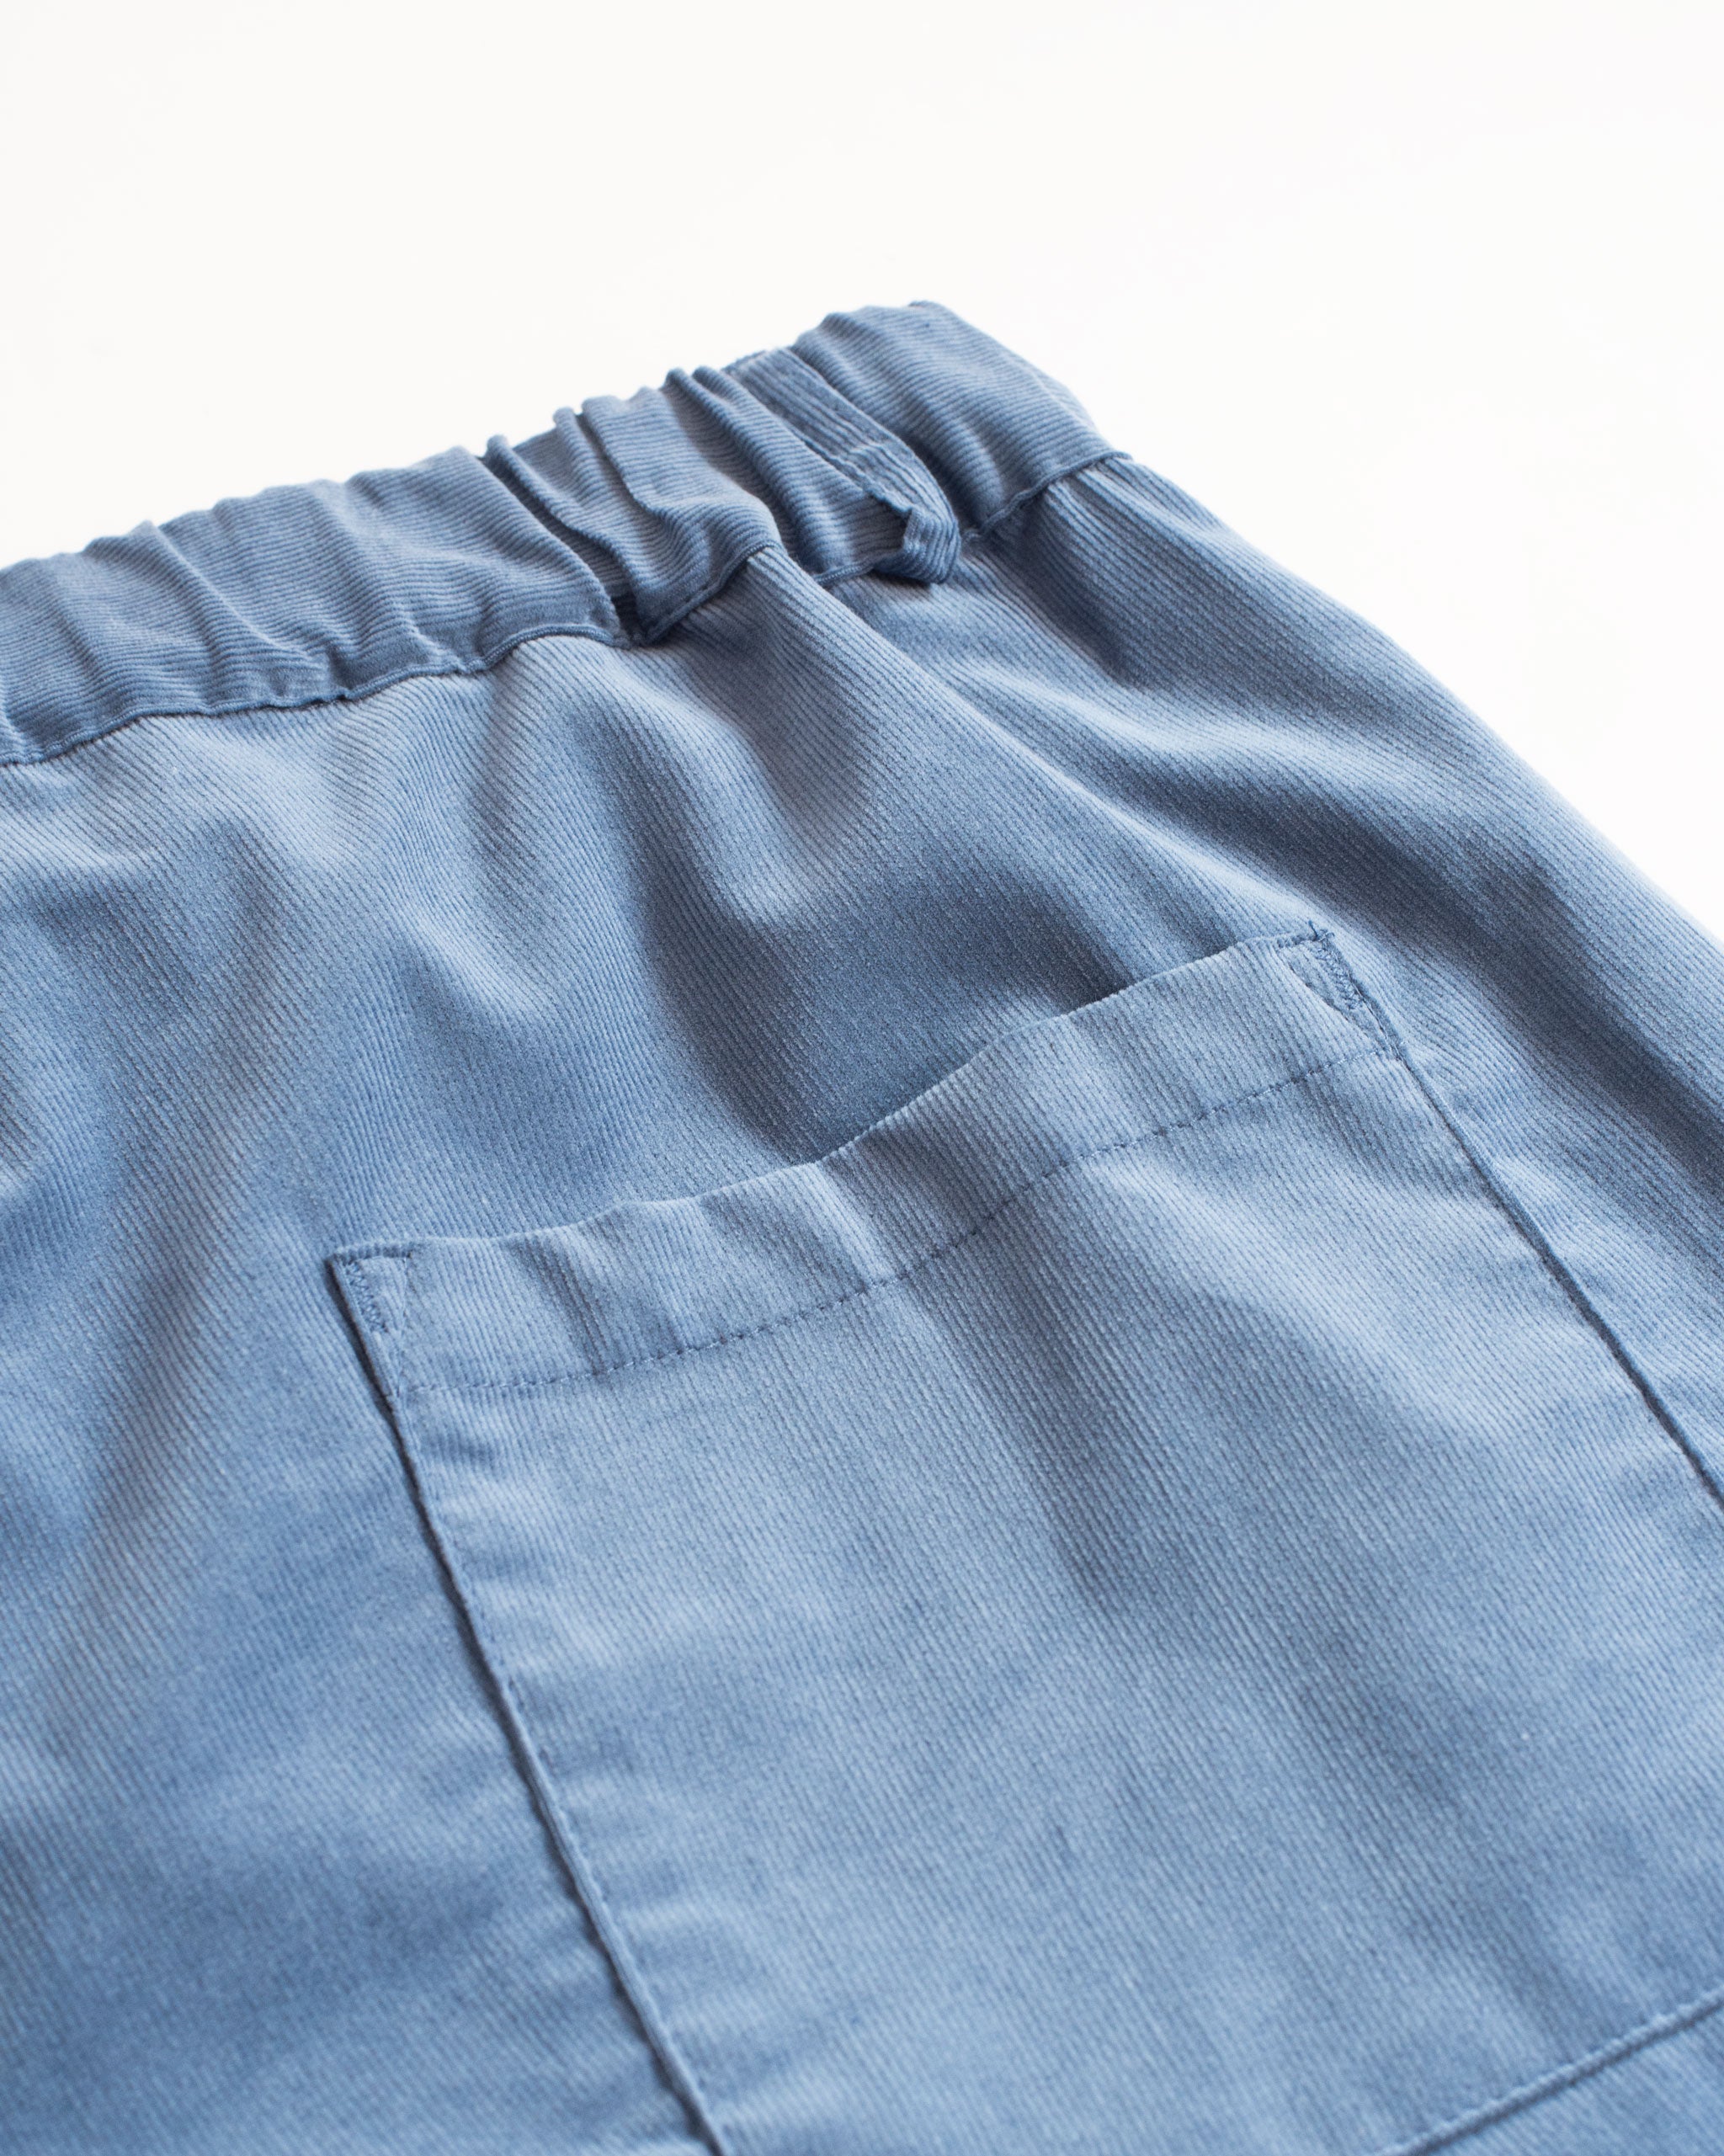 back pocket shot of Solid Blue Cotton Corduroy Leisure Shorts